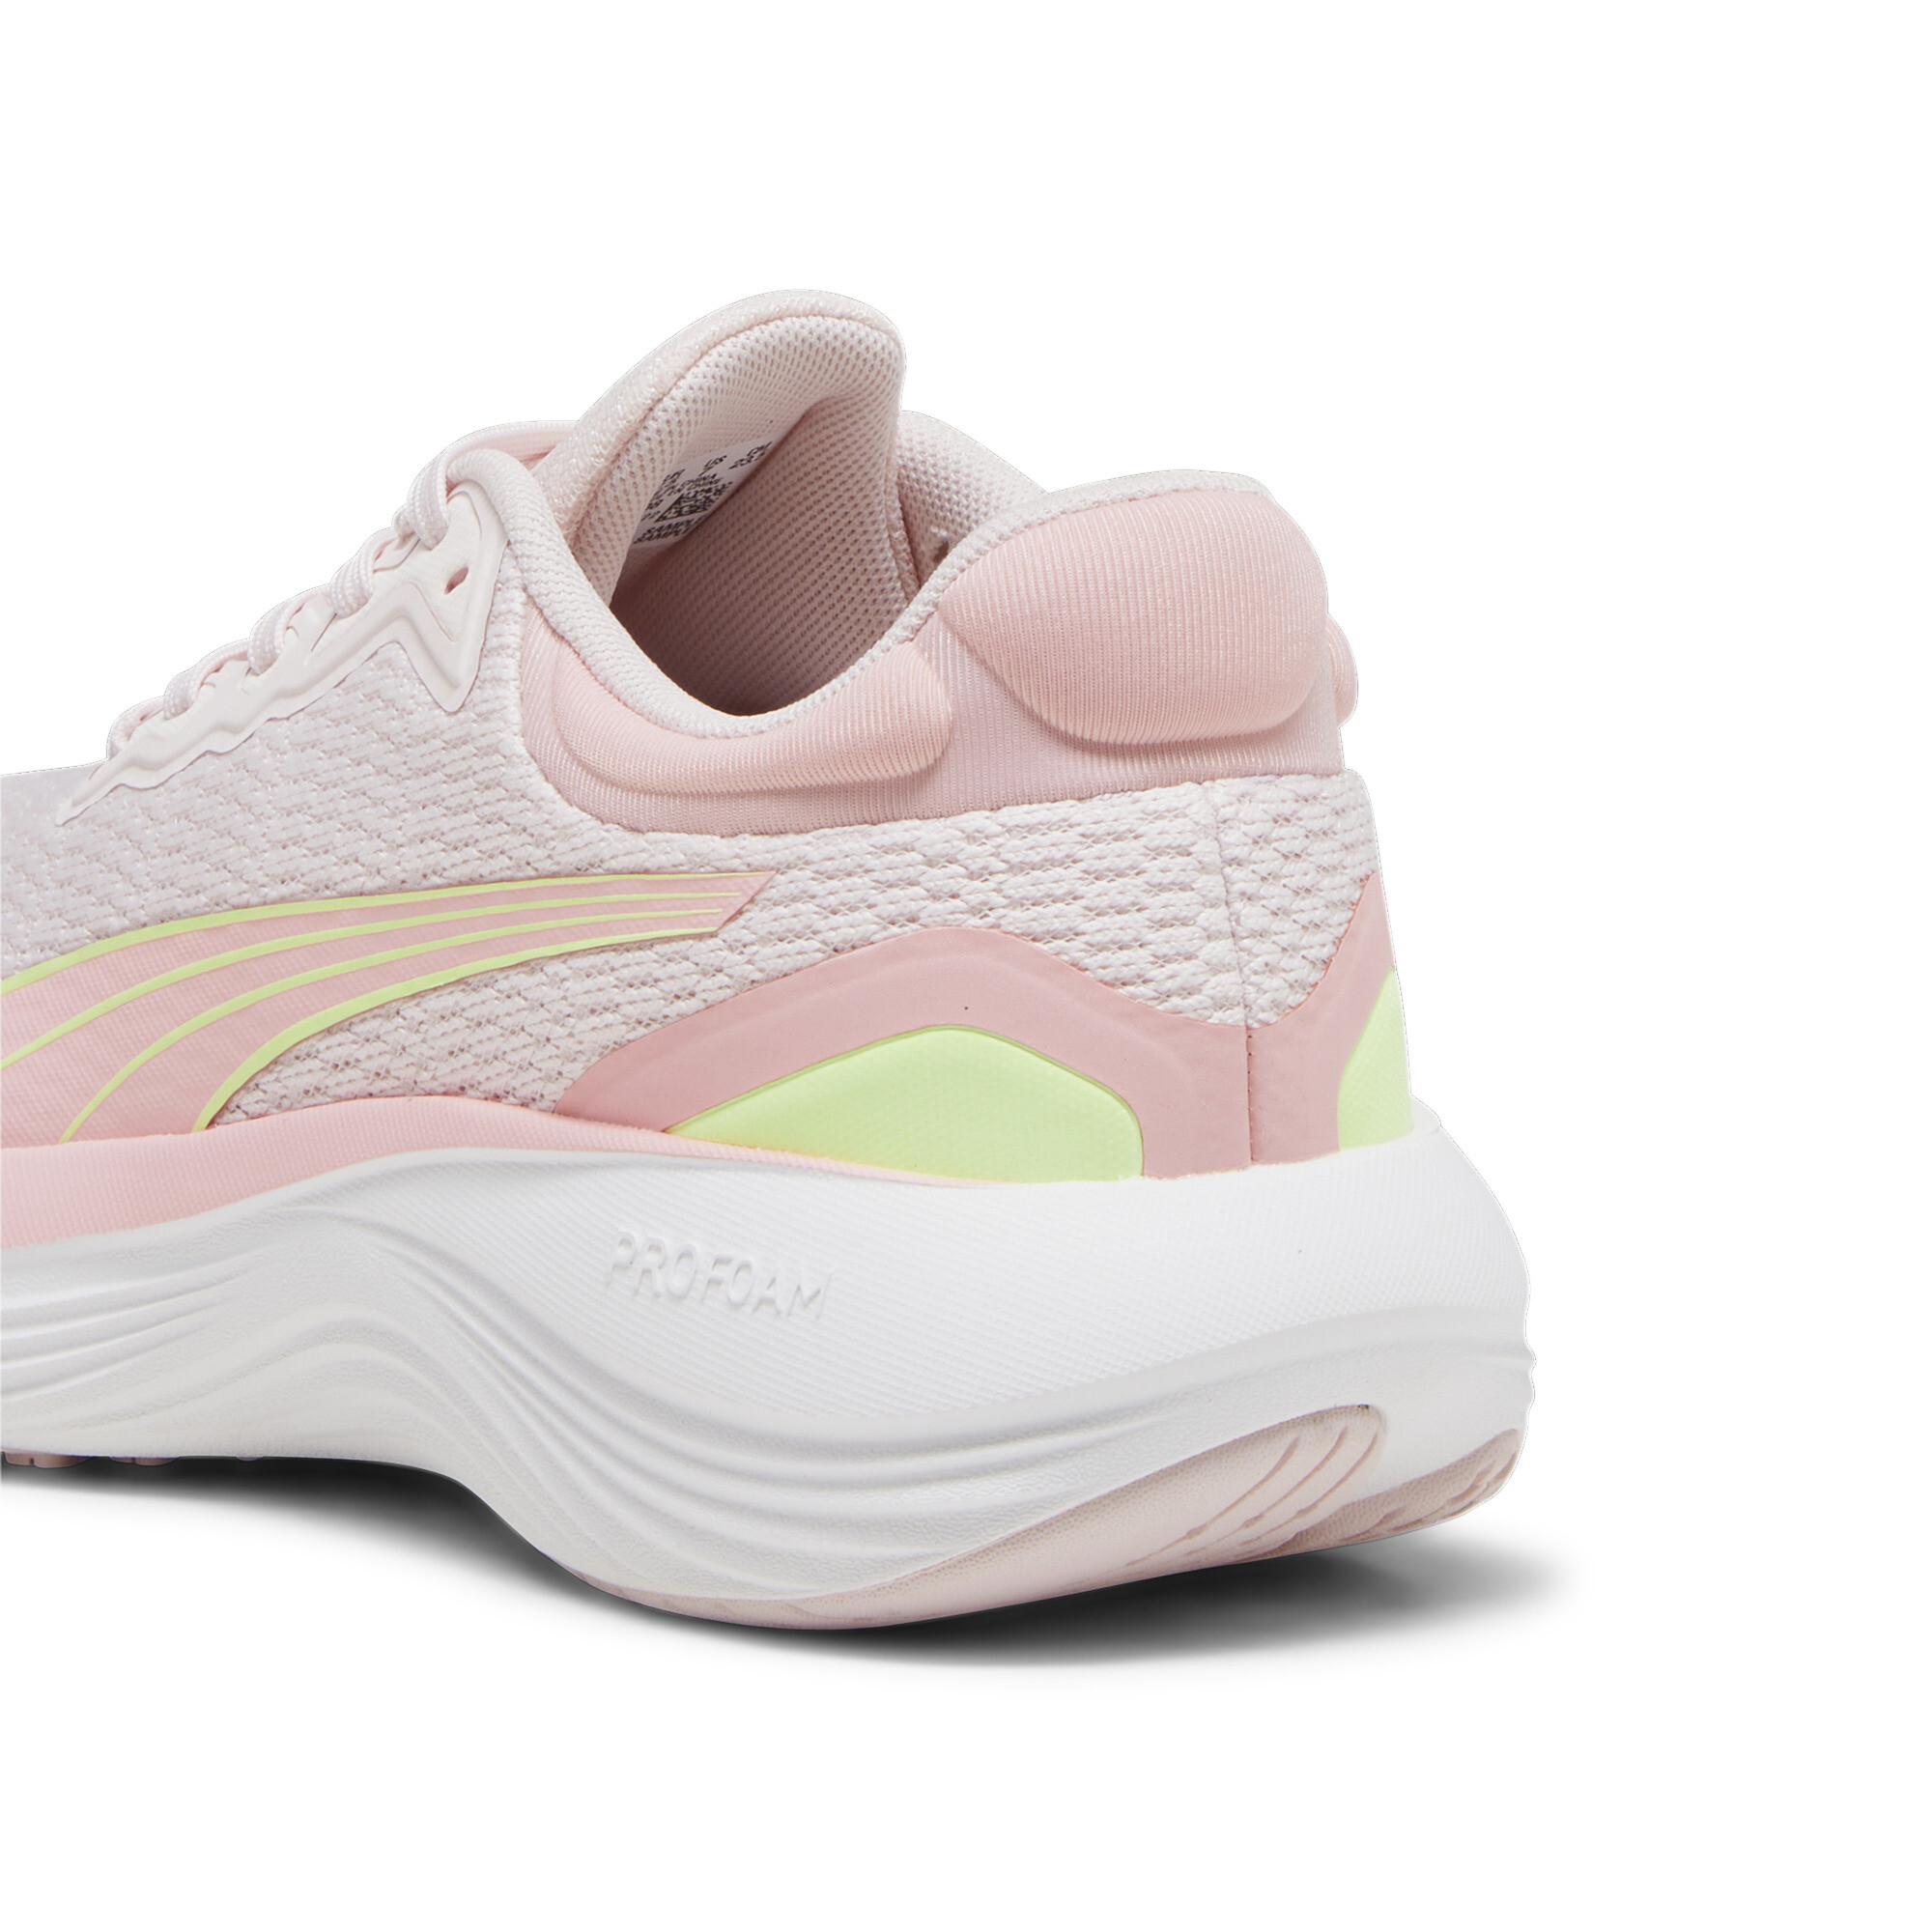 Men's PUMA Scend Pro Running Shoes In Pink, Size EU 40.5